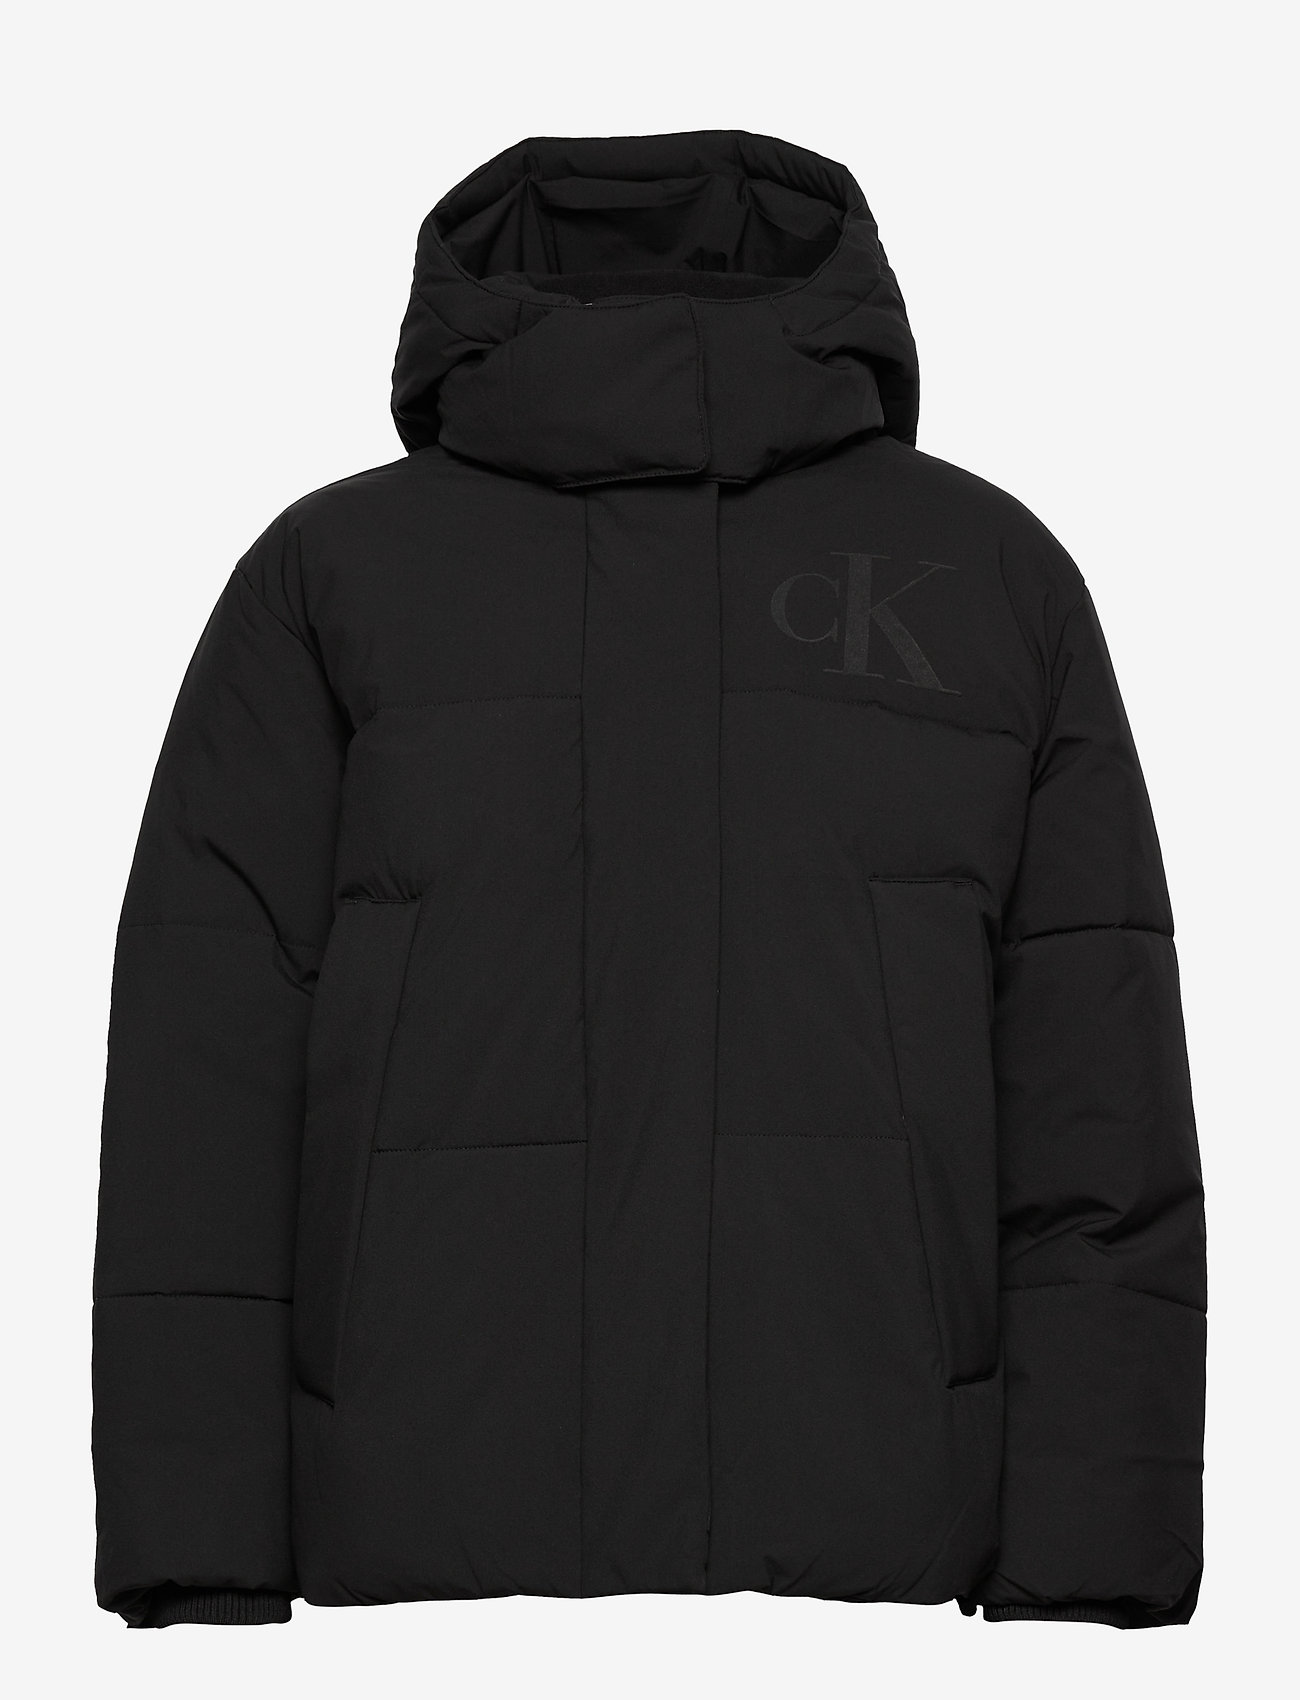 ck 3 in 1 jacket